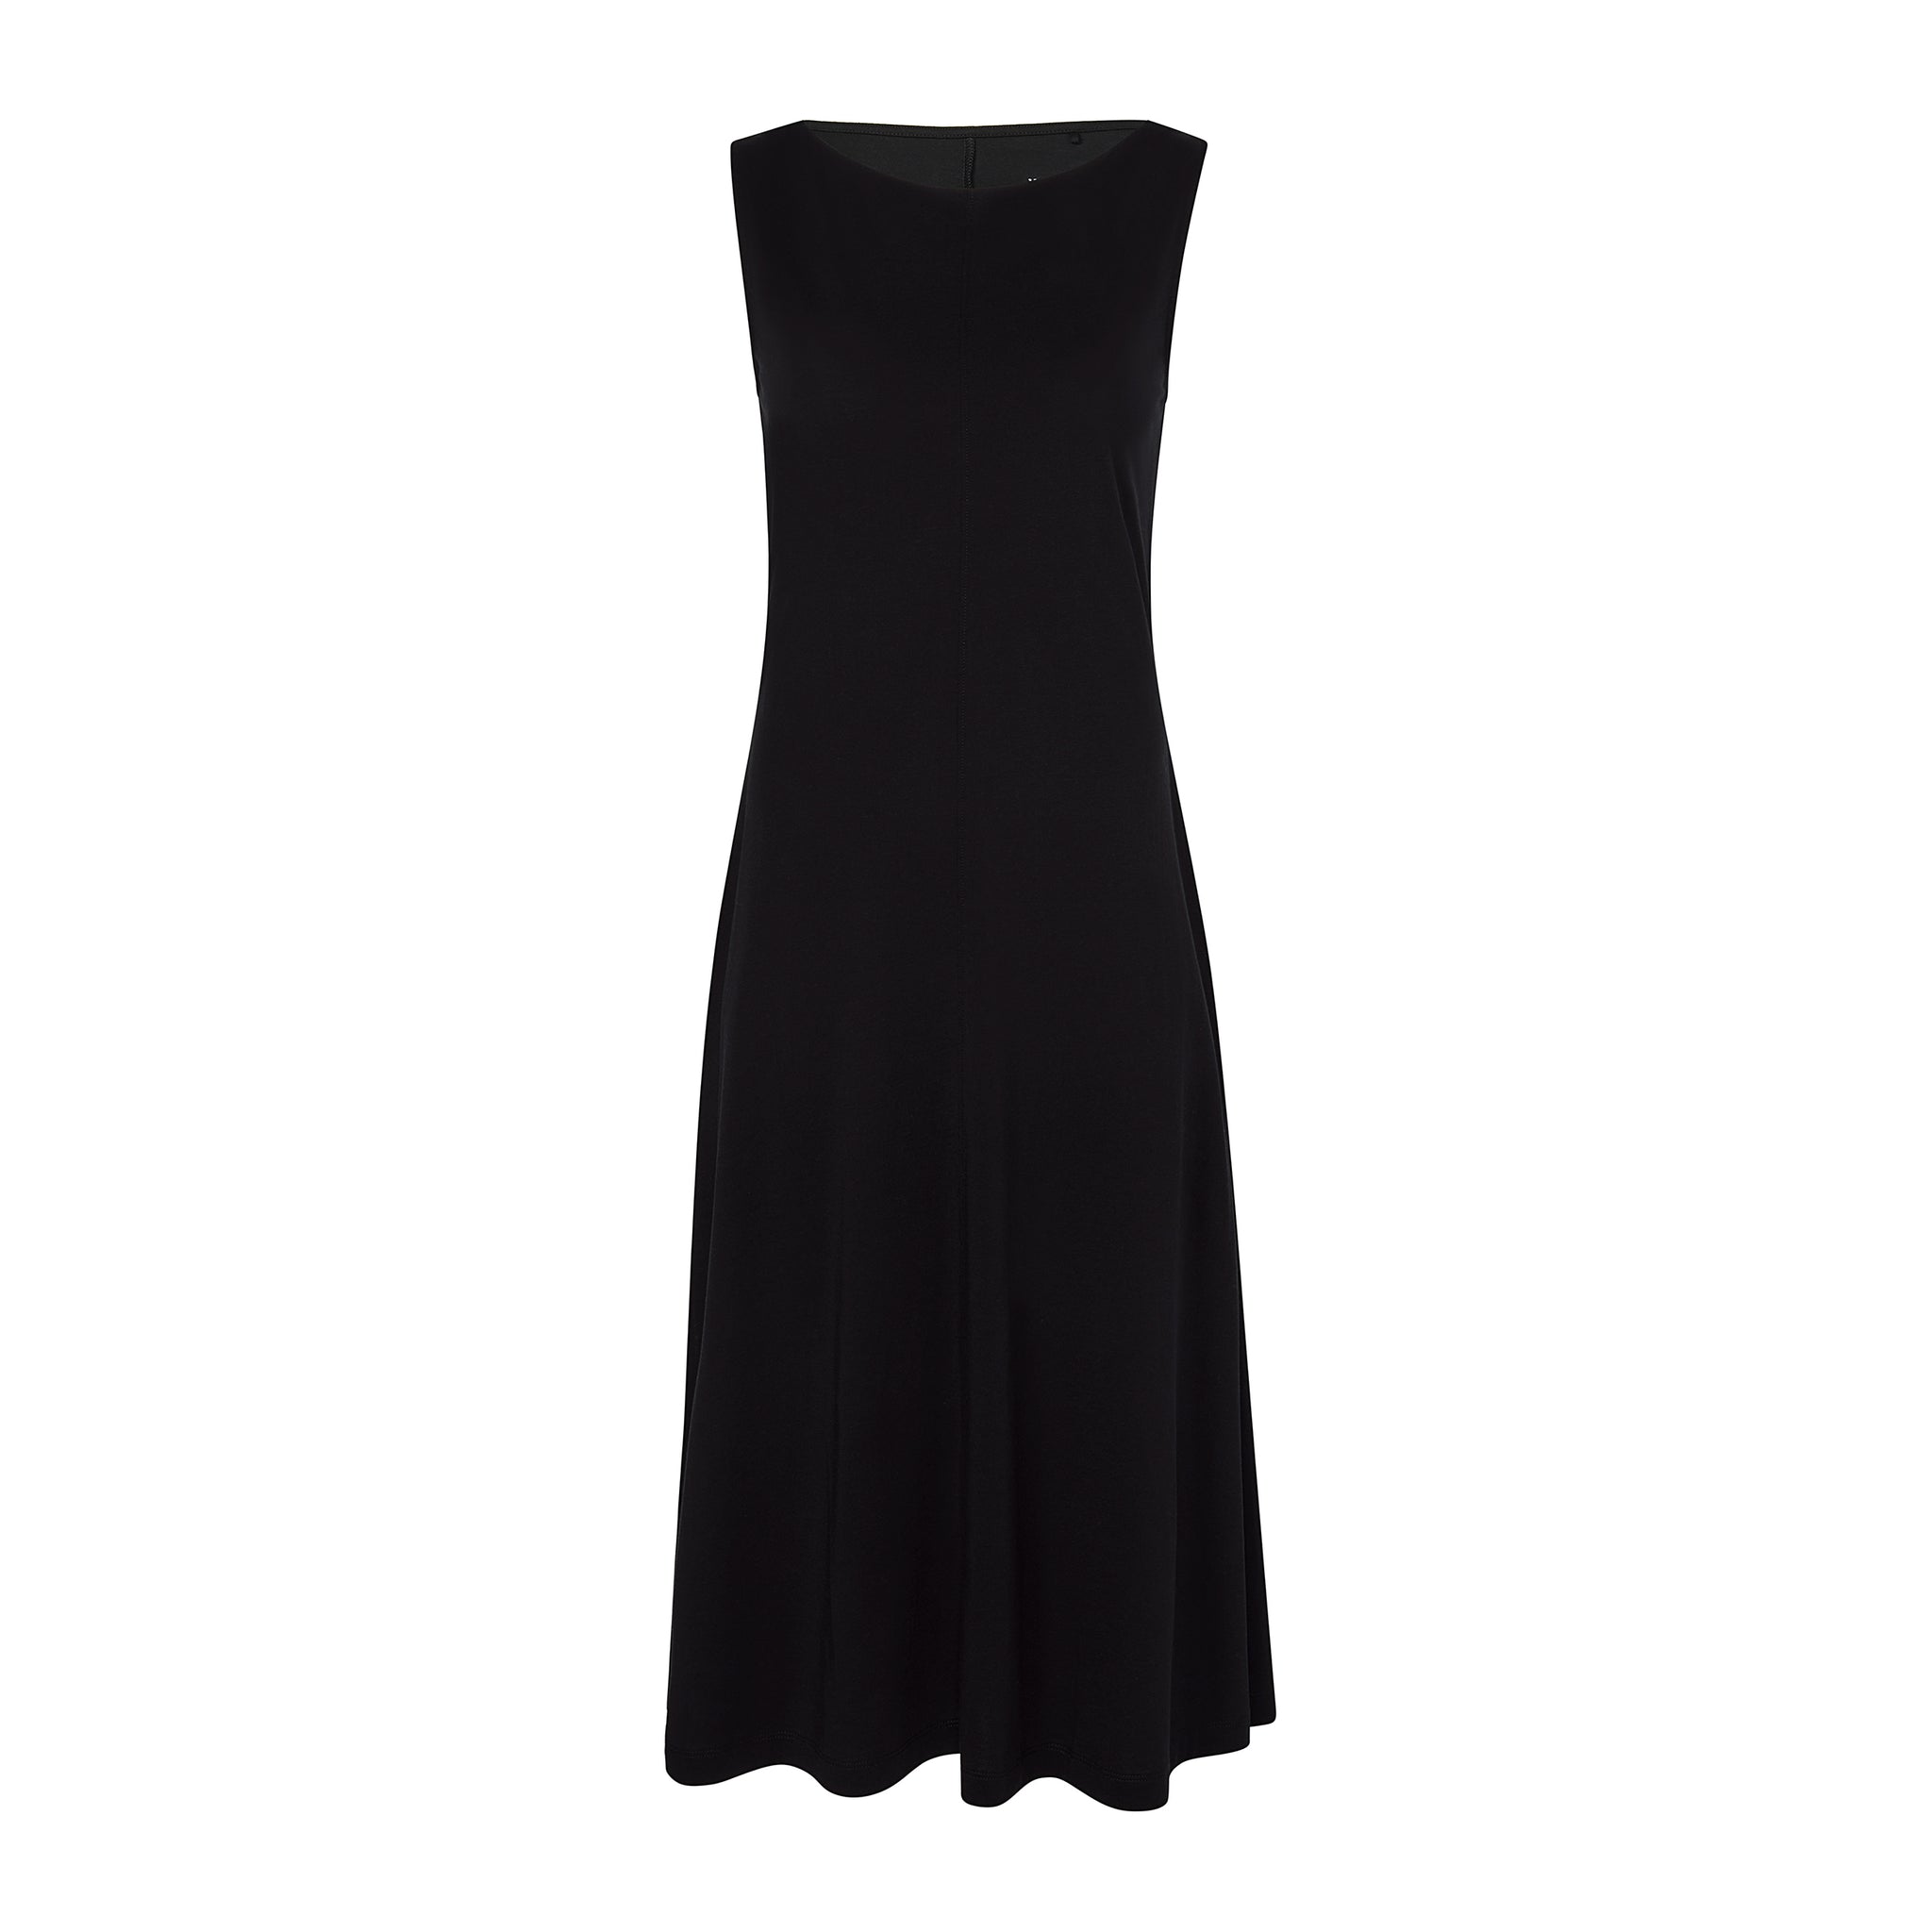 packshot image of the milano dress in black